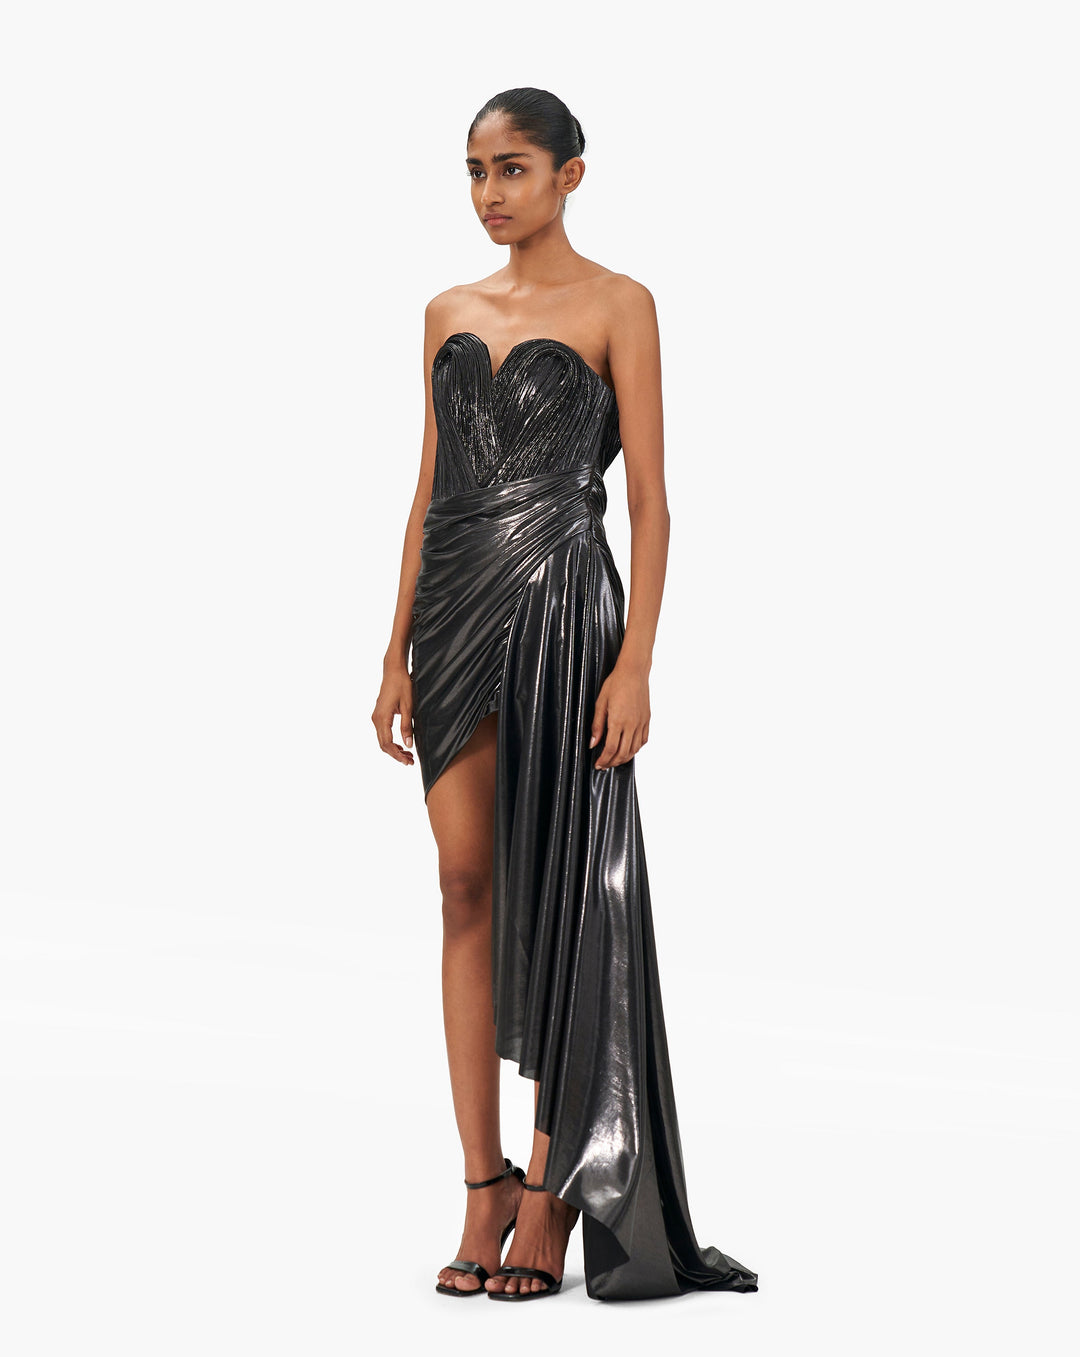 The Glistening Drape Sculpted Dress